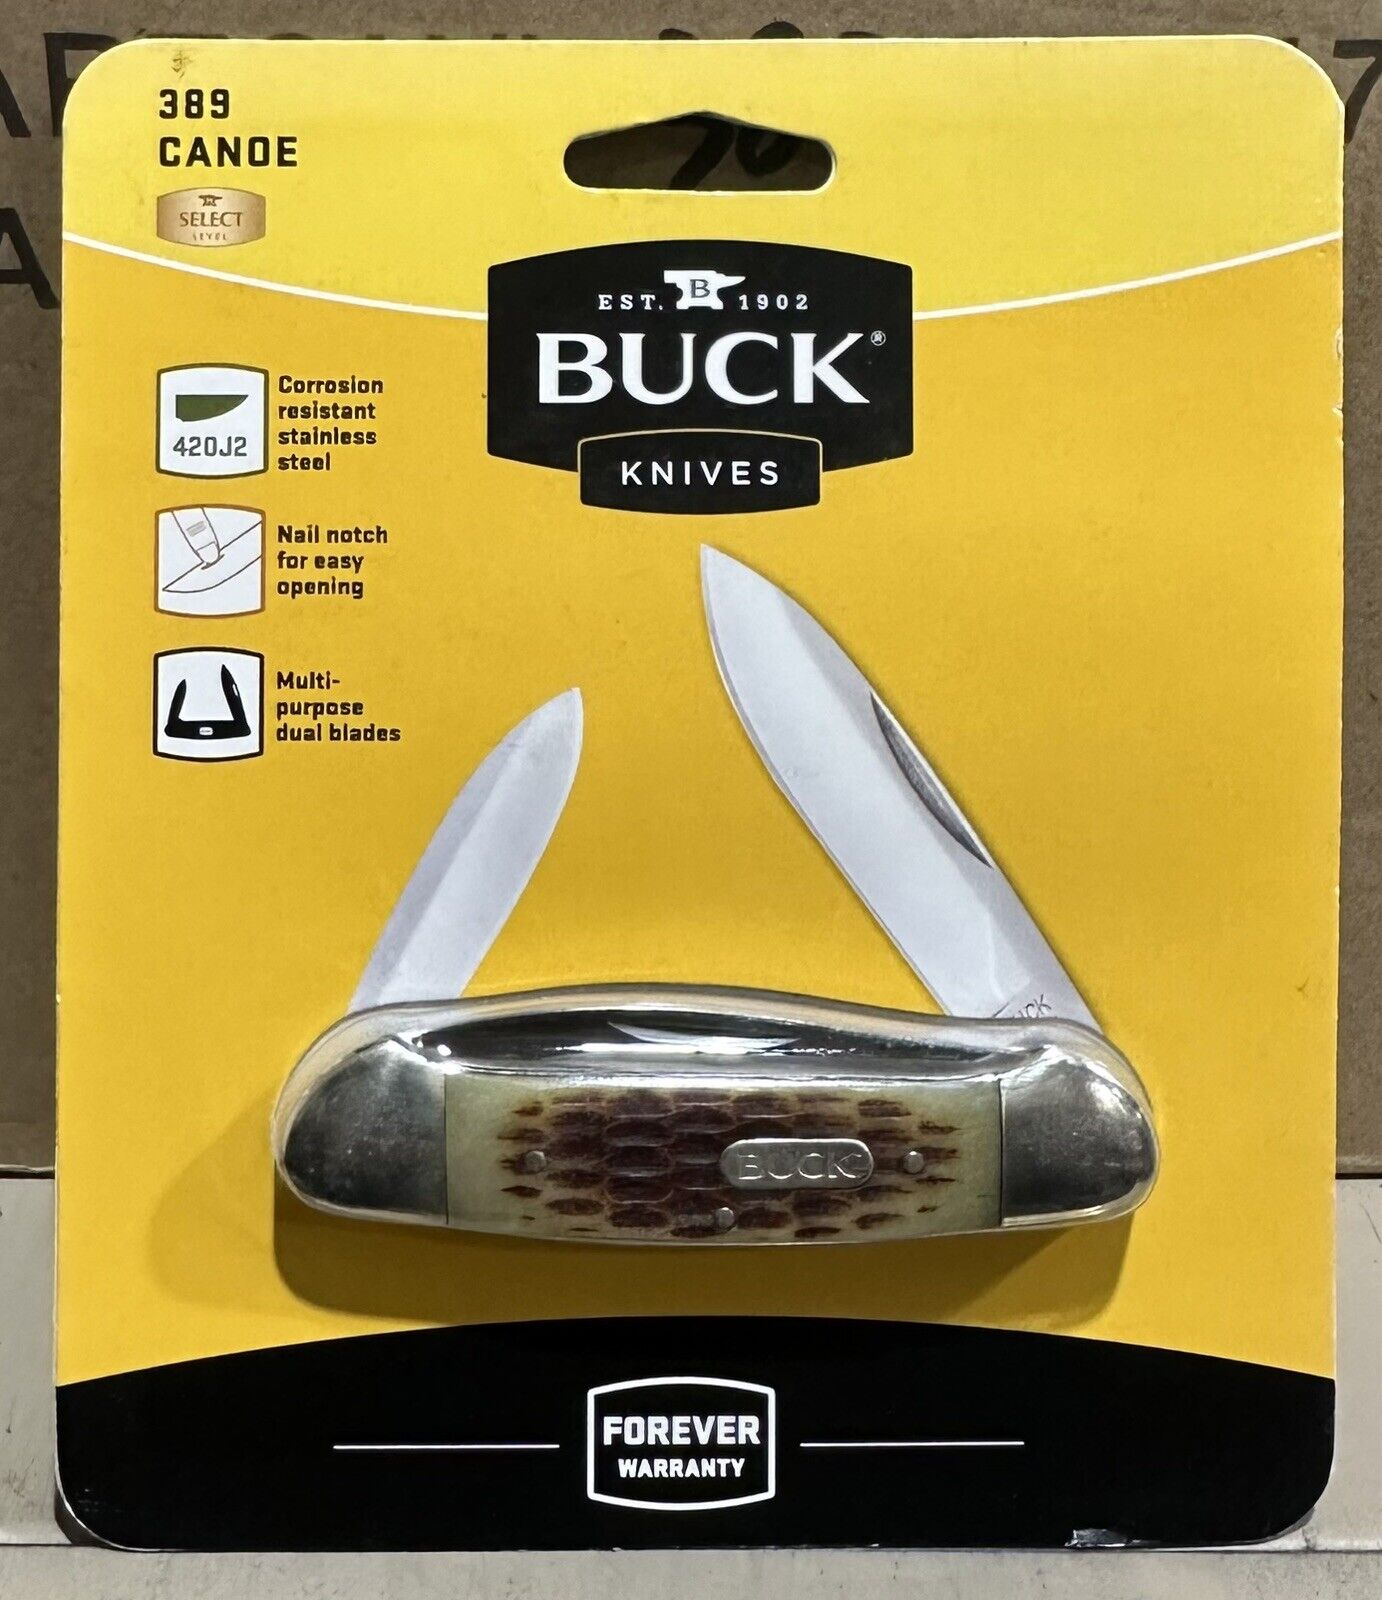 Buck Knives Canoe 389 Folding 2 Blade Pocket Knife 520J2